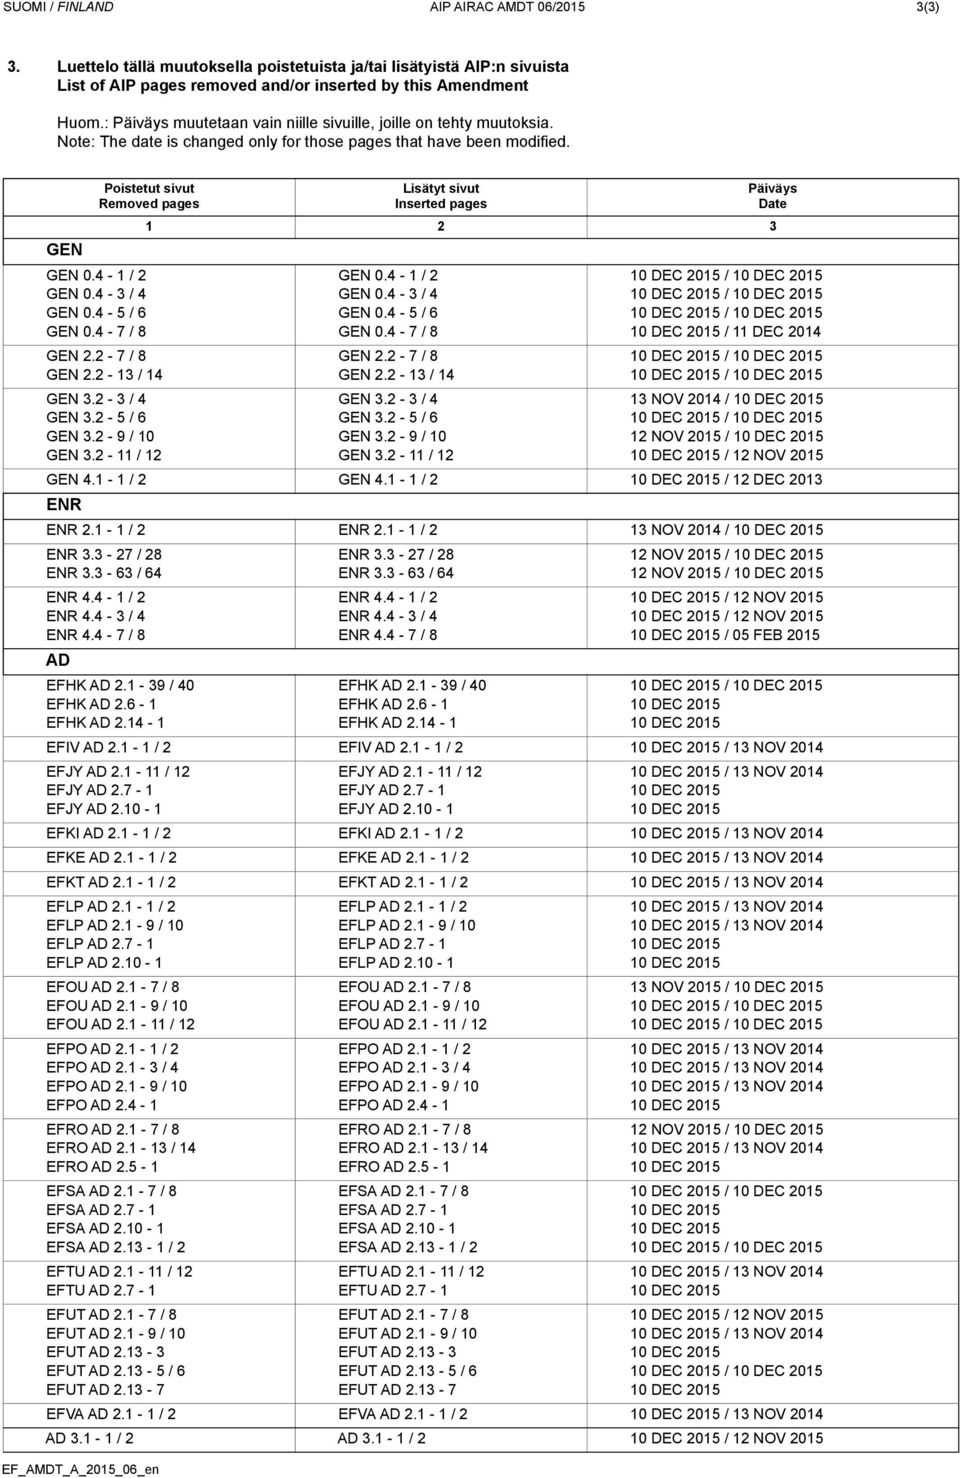 Poistetut sivut Removed pages Lisätyt sivut Inserted pages Päiväys Date 1 2 3 GEN GEN 0.4-1 / 2 GEN 0.4-3 / 4 GEN 0.4-5 / 6 GEN 0.4-7 / 8 GEN 0.4-1 / 2 GEN 0.4-3 / 4 GEN 0.4-5 / 6 GEN 0.4-7 / 8 / / / / 11 DEC 2014 GEN 2.